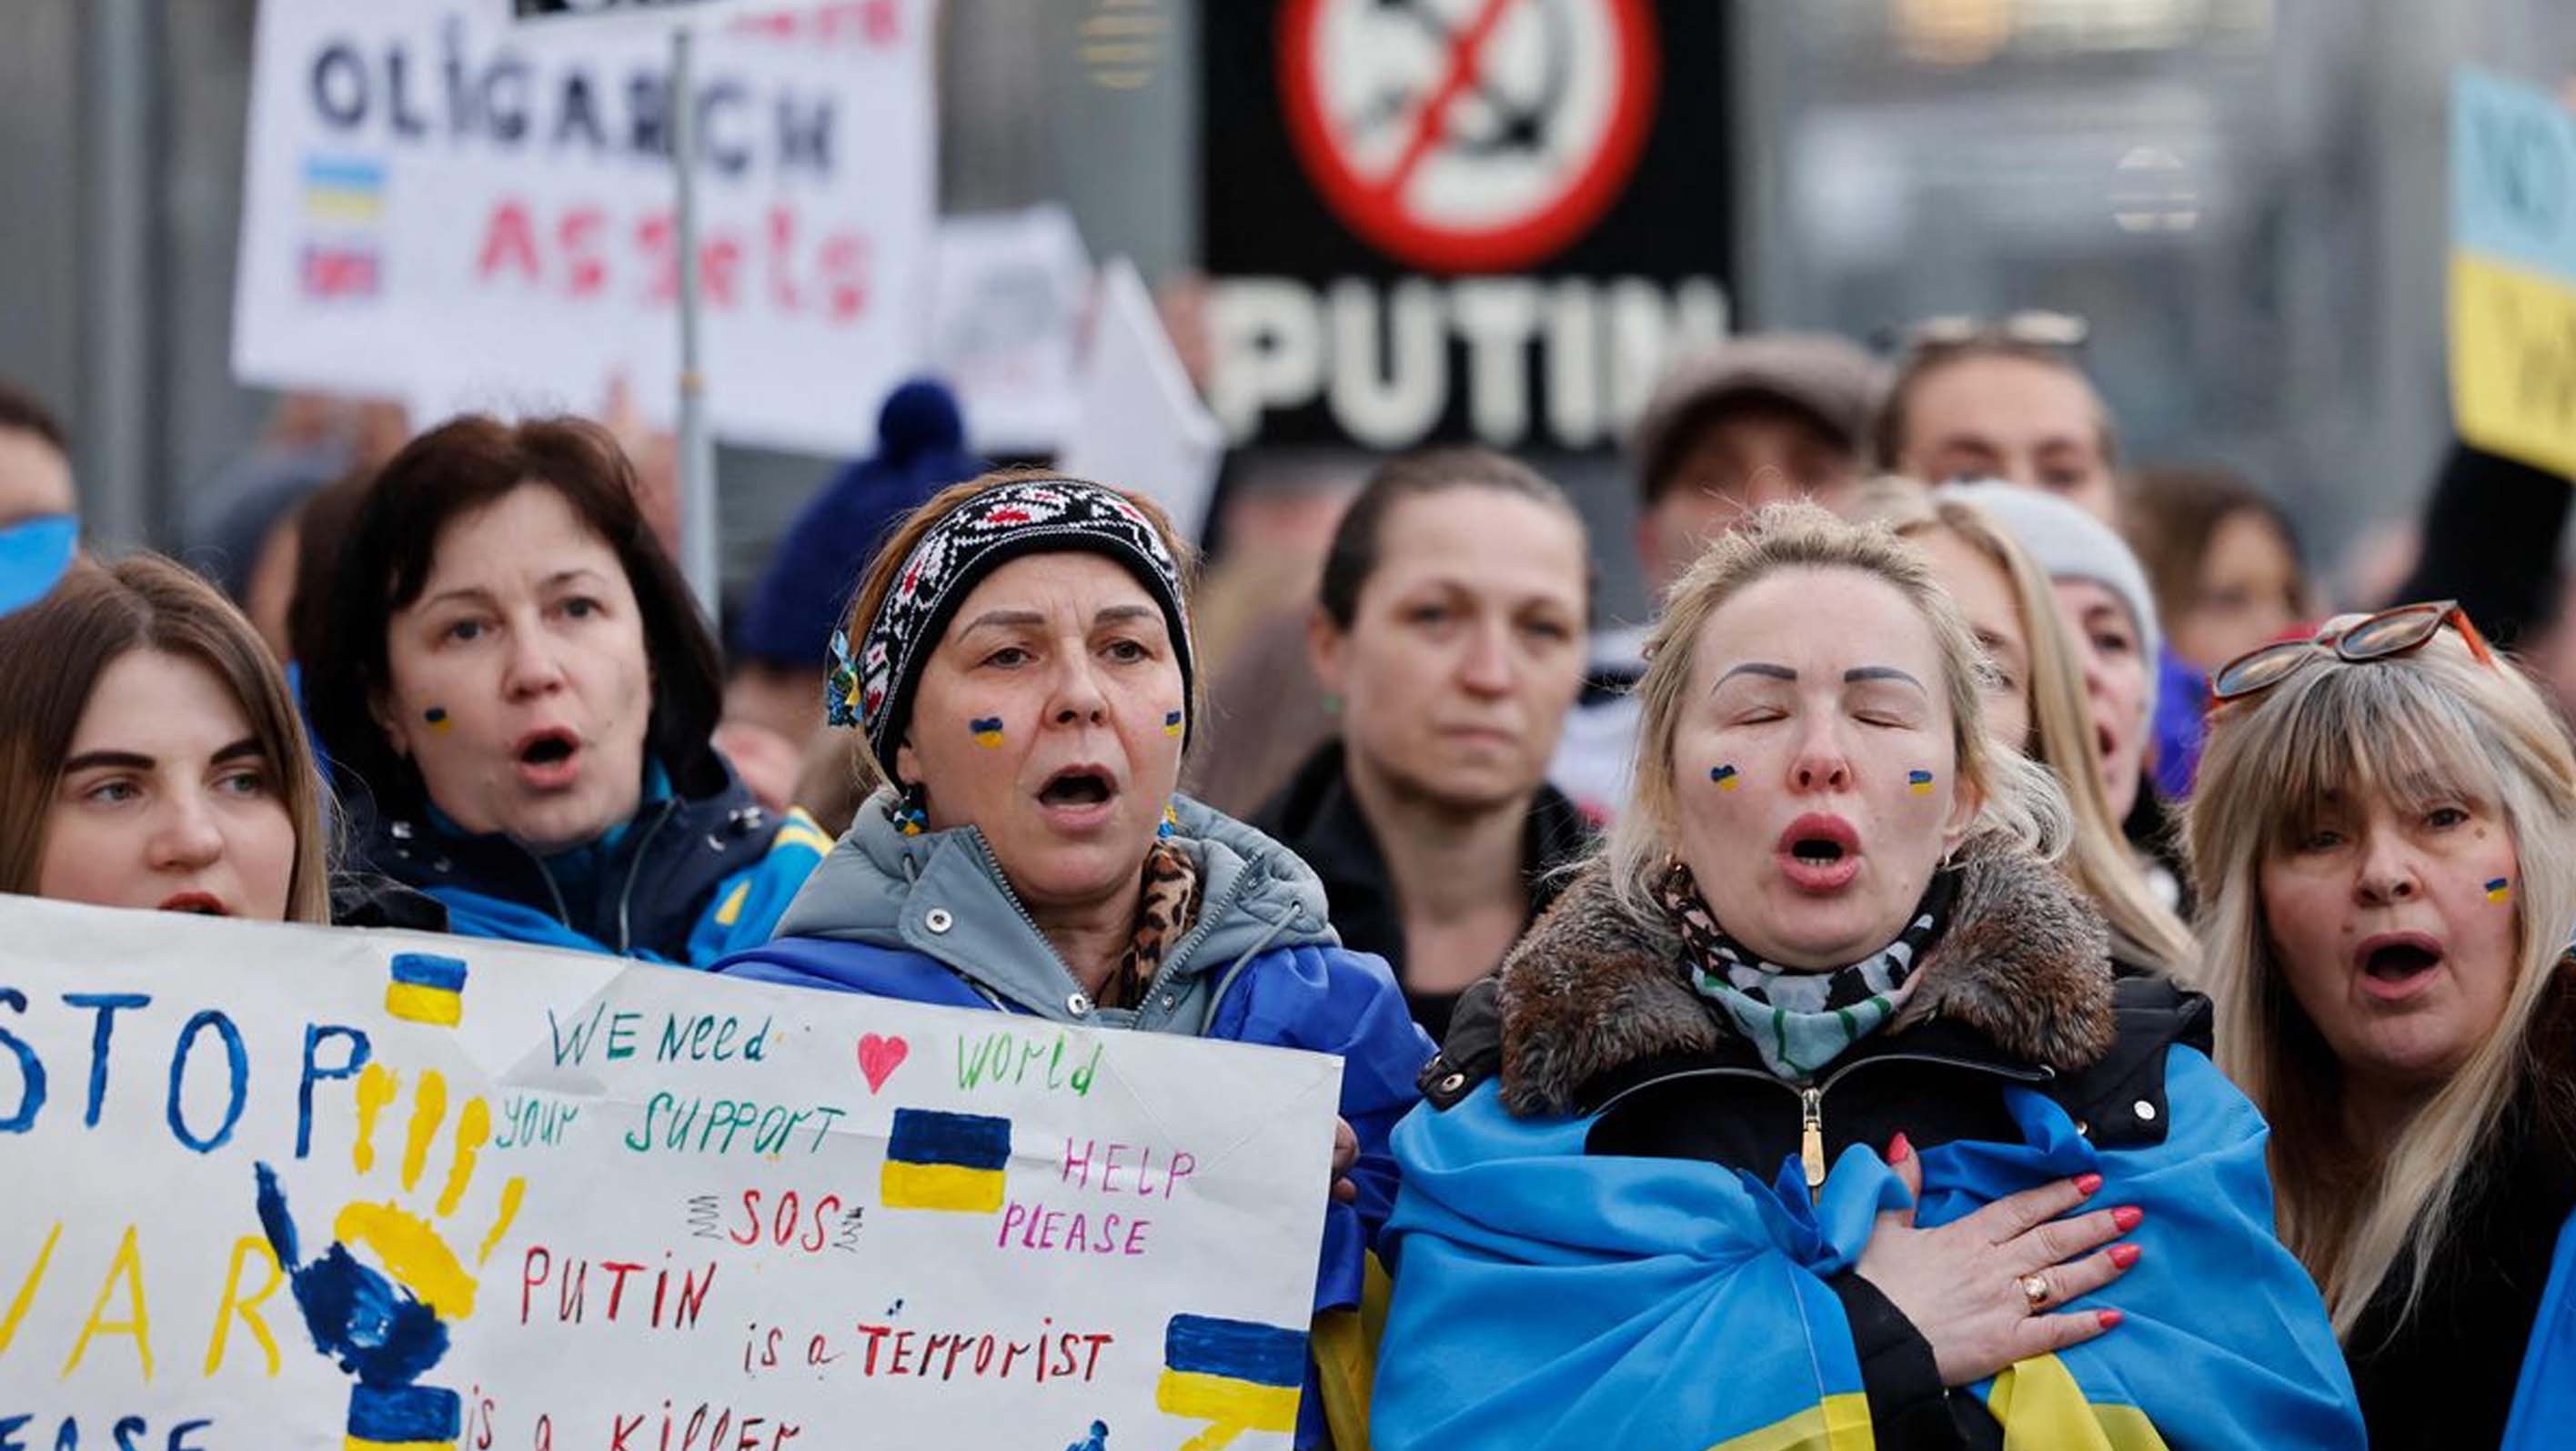 Nobel laureate: My full solidarity with Ukrainians' right to struggle against dictator Putin